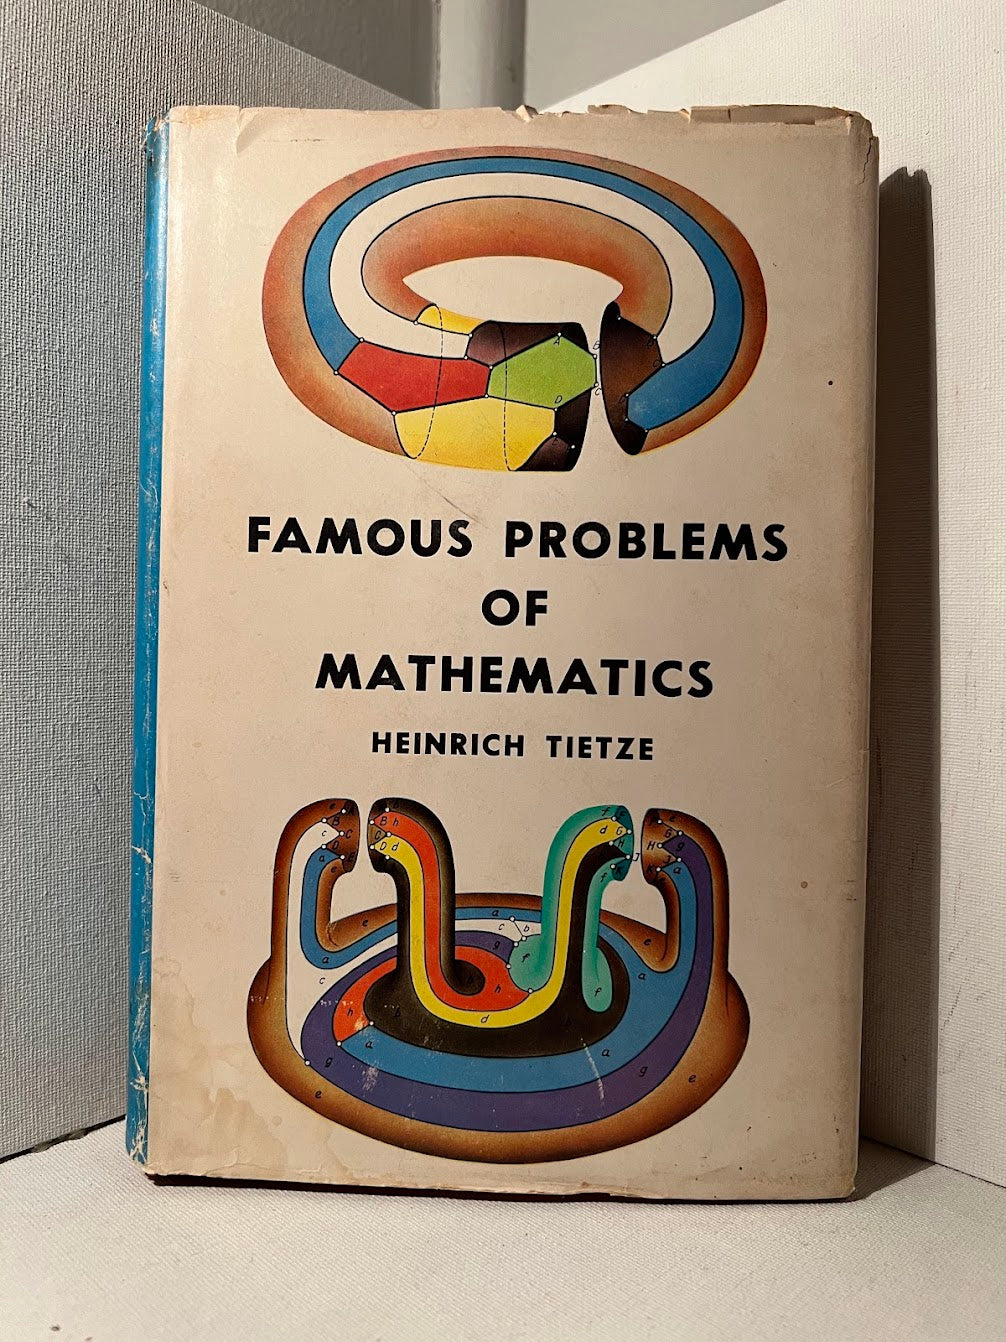 Famous Problems of Mathematics by Heinrich Tietze